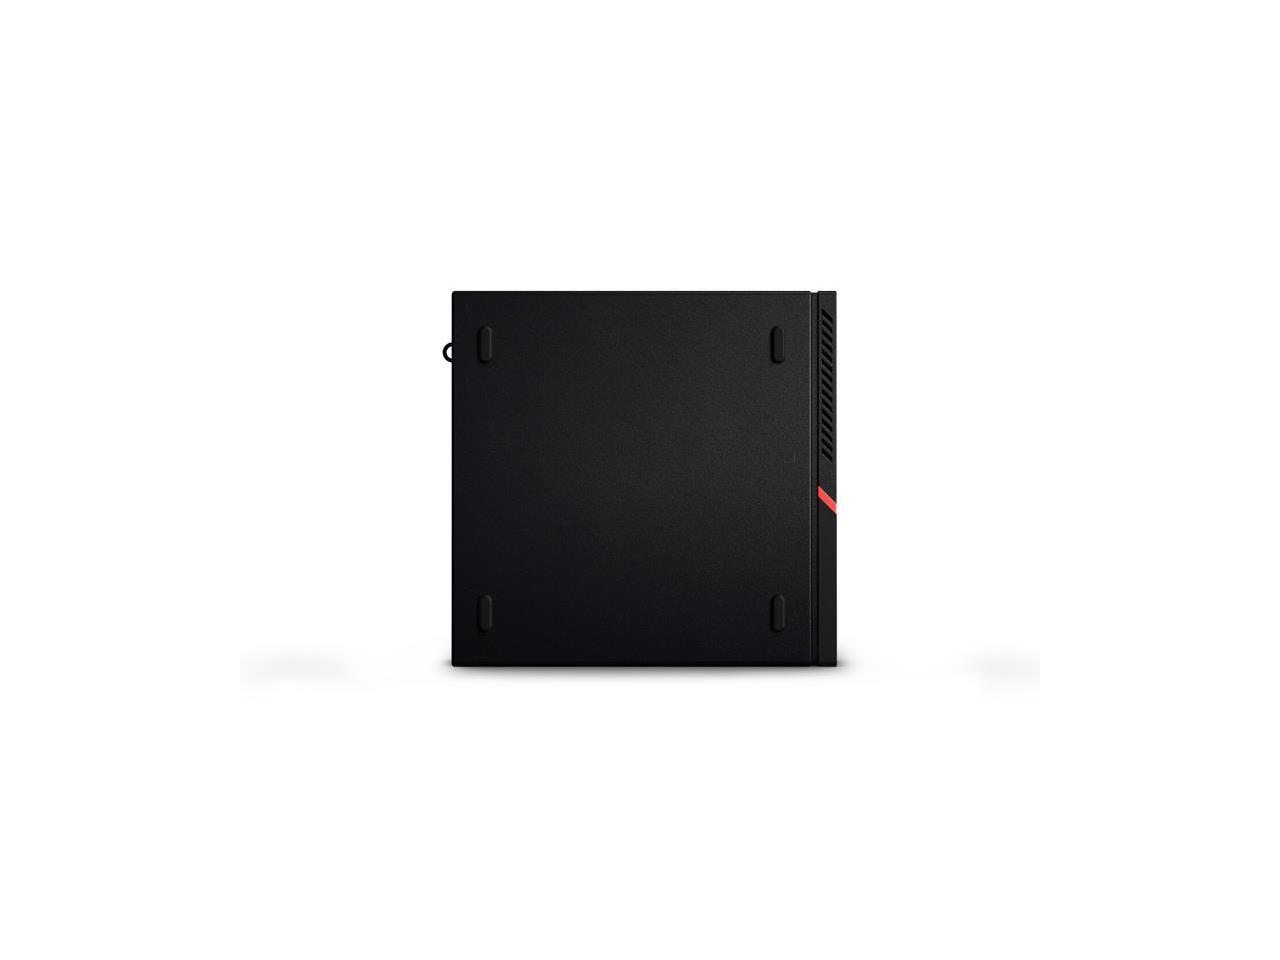 Lenovo ThinkCentre M715q tiny Home and Business Desktop Black (AMD Ryzen 5 PRO 2400GE 4-Core, 8GB RAM, 256GB m.2 SATA SSD, AMD Radeon RX Vega 11, Wifi, Bluetooth, 3xUSB 3.1, 2xDP Port, Win 10 Pro)